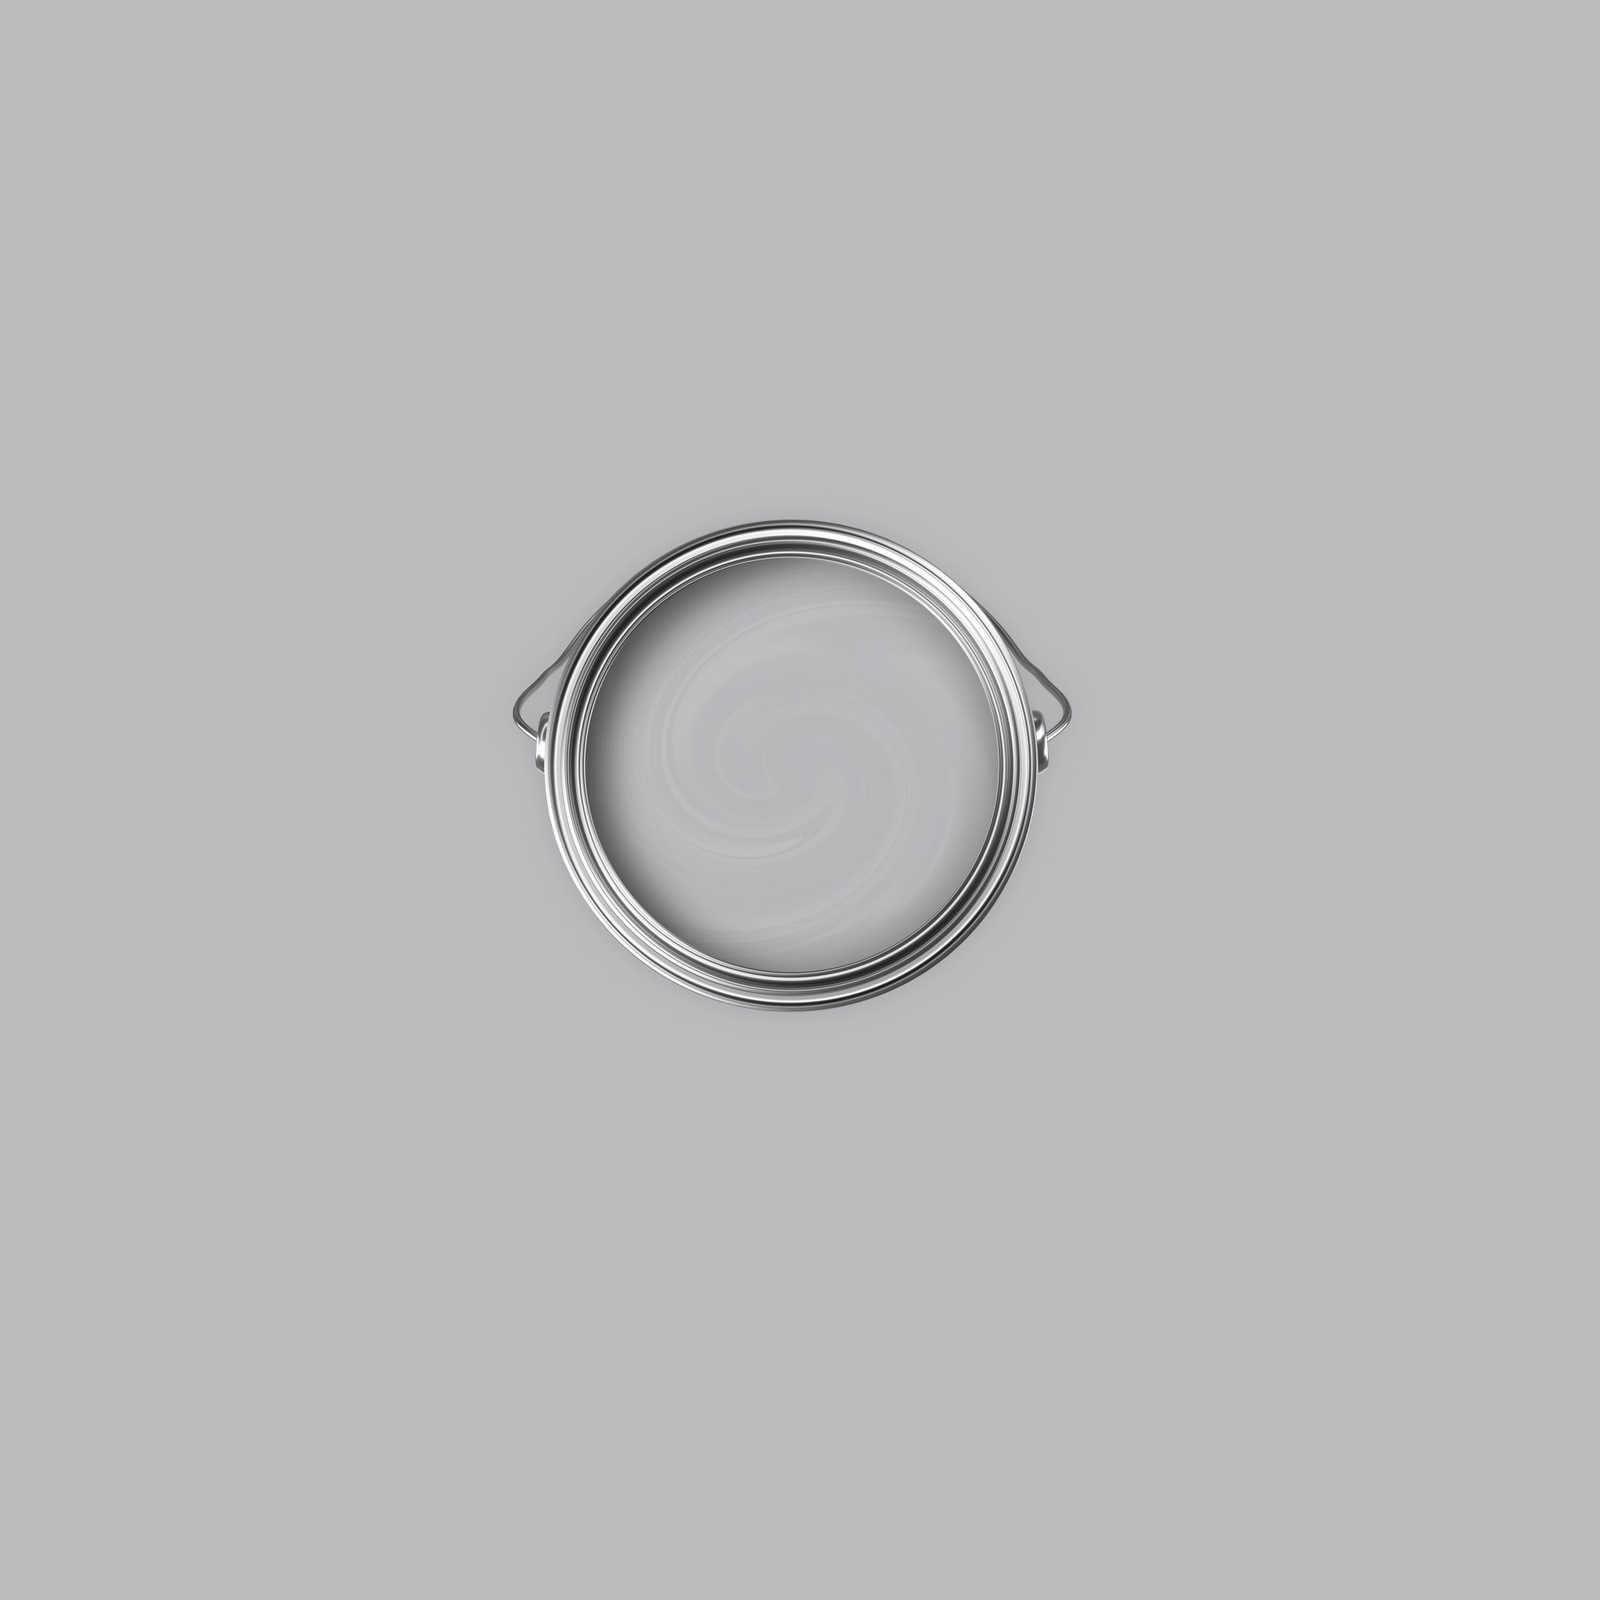             Premium Muurverf Balanced Silver »Industrial Grey« NW101 – 1 liter
        